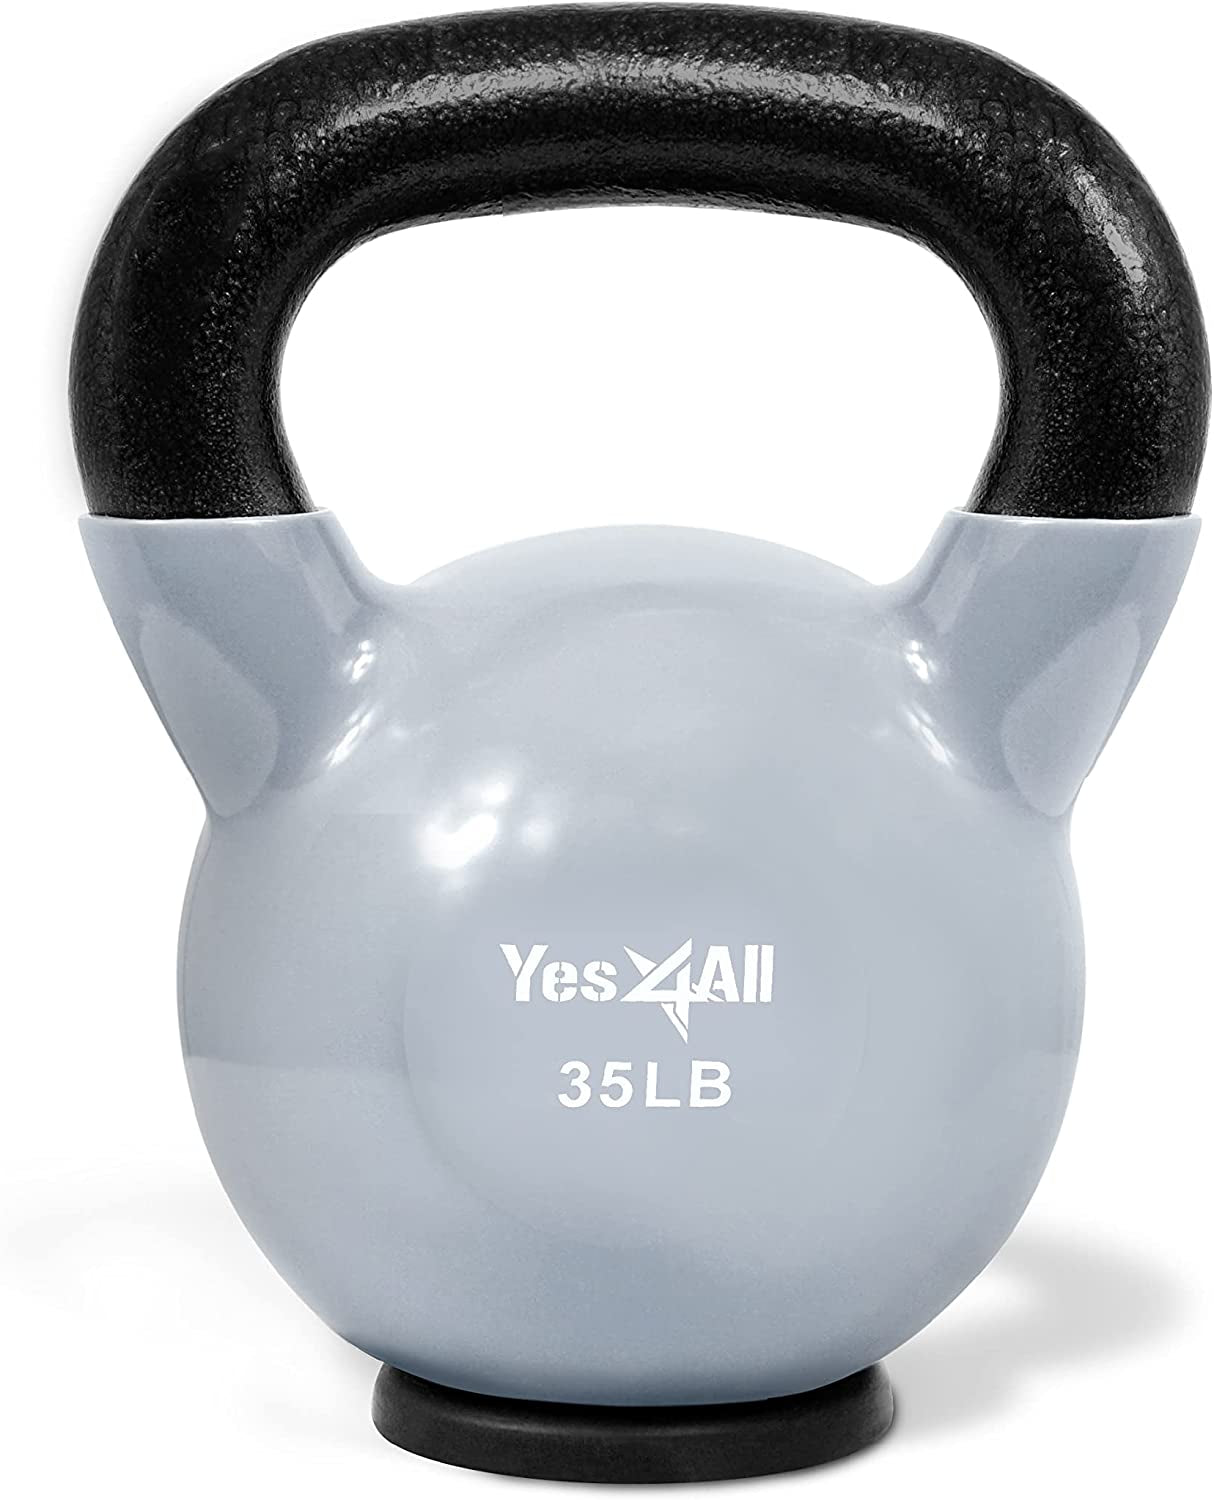 Kettlebells Rubber Base/Vinyl Coated Cast Iron Kettlebell - Exercise Fitness Weights for Home Gym, Strength Training